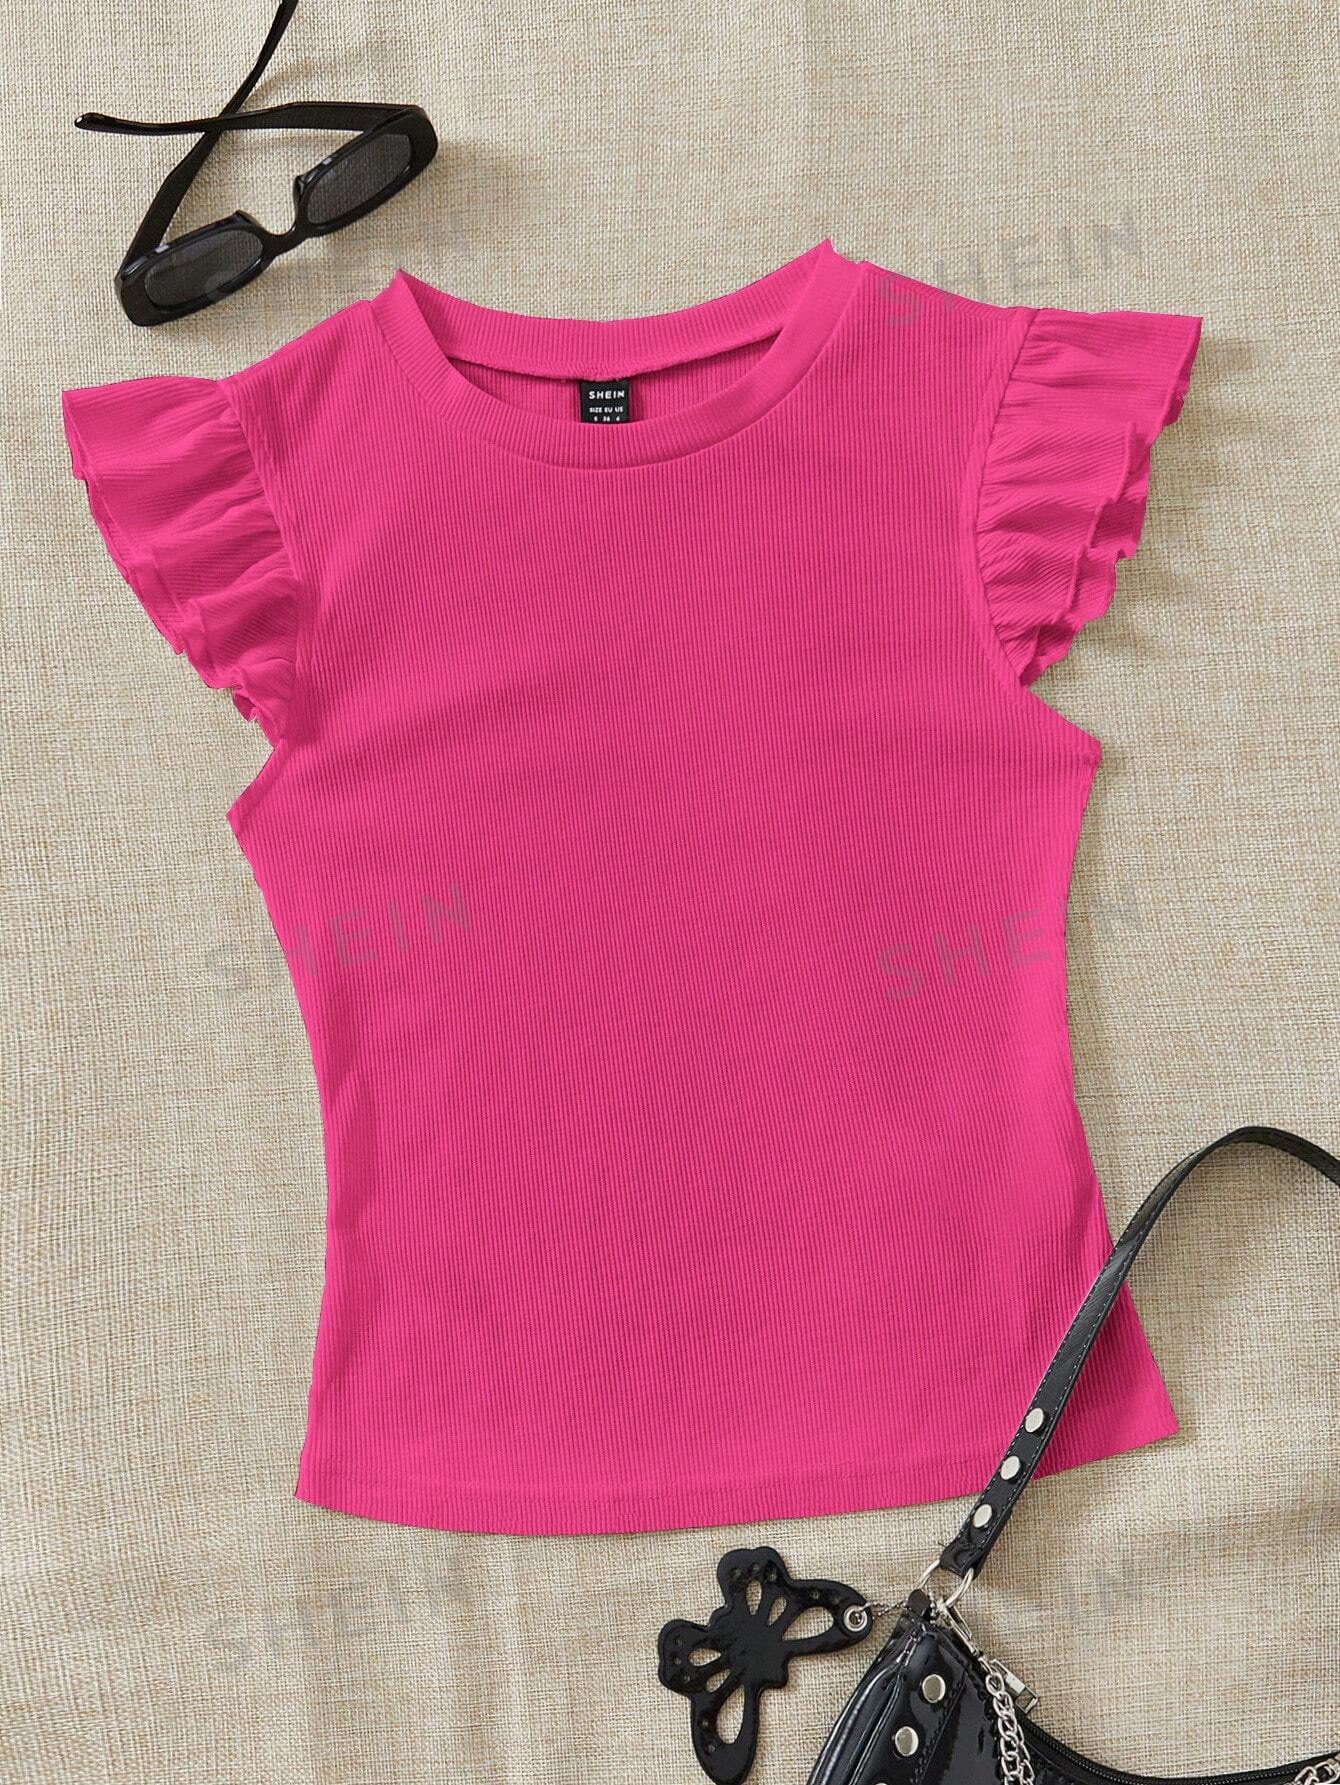 SHEIN WYWH трикотажная однотонная женская футболка с круглым вырезом и короткими рукавами, ярко-розовый